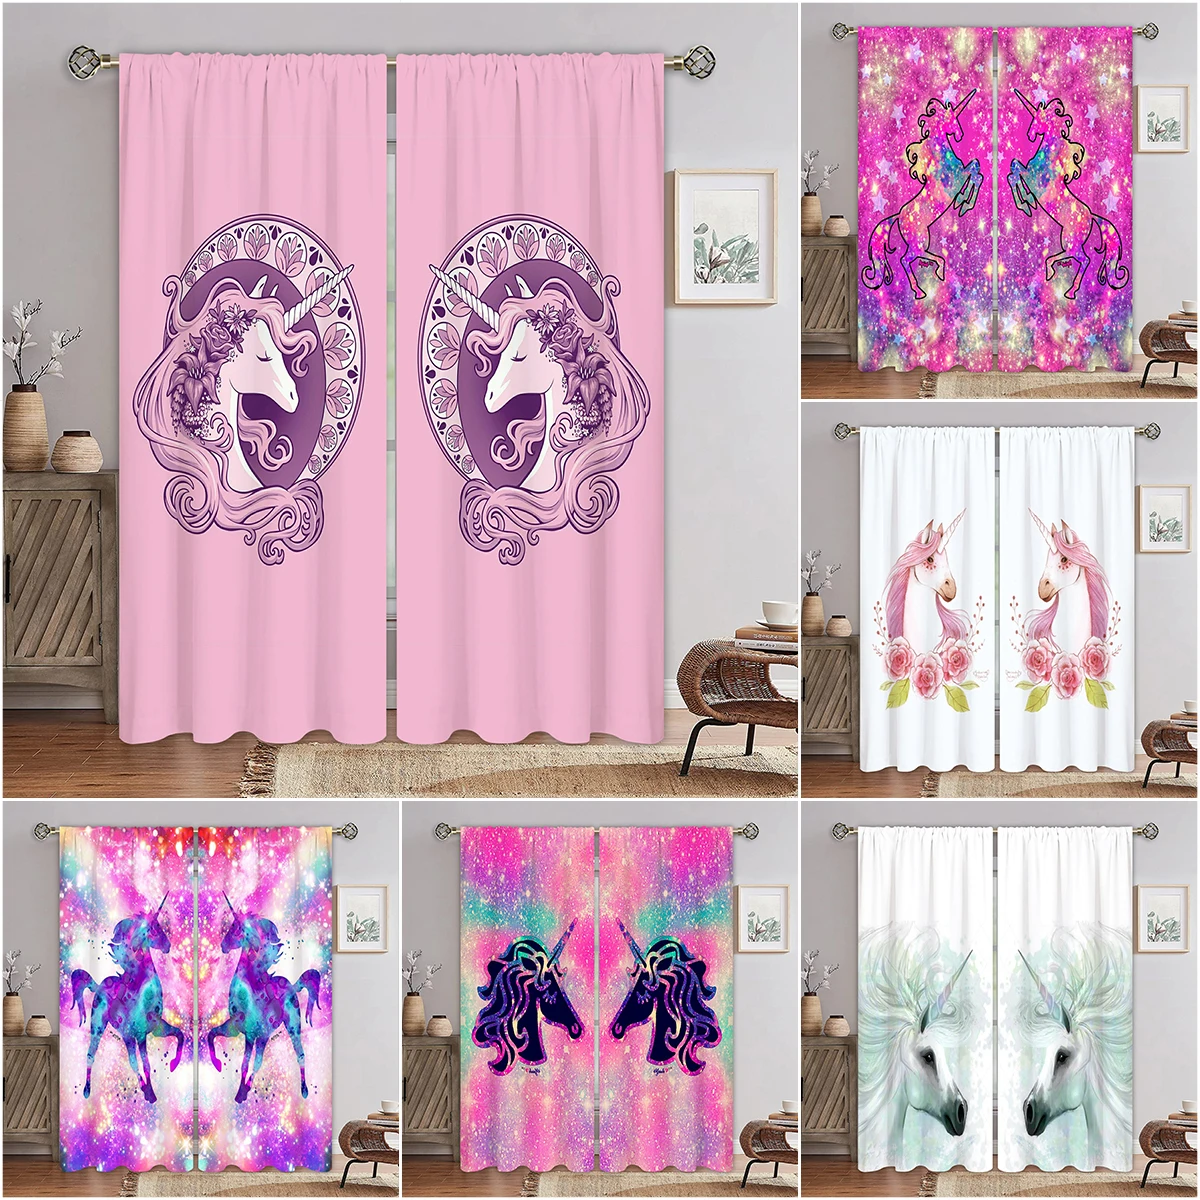 

Dazzle Unicorns 3D Digital Printing Bedroom Living Room Window Curtains 2 Panels